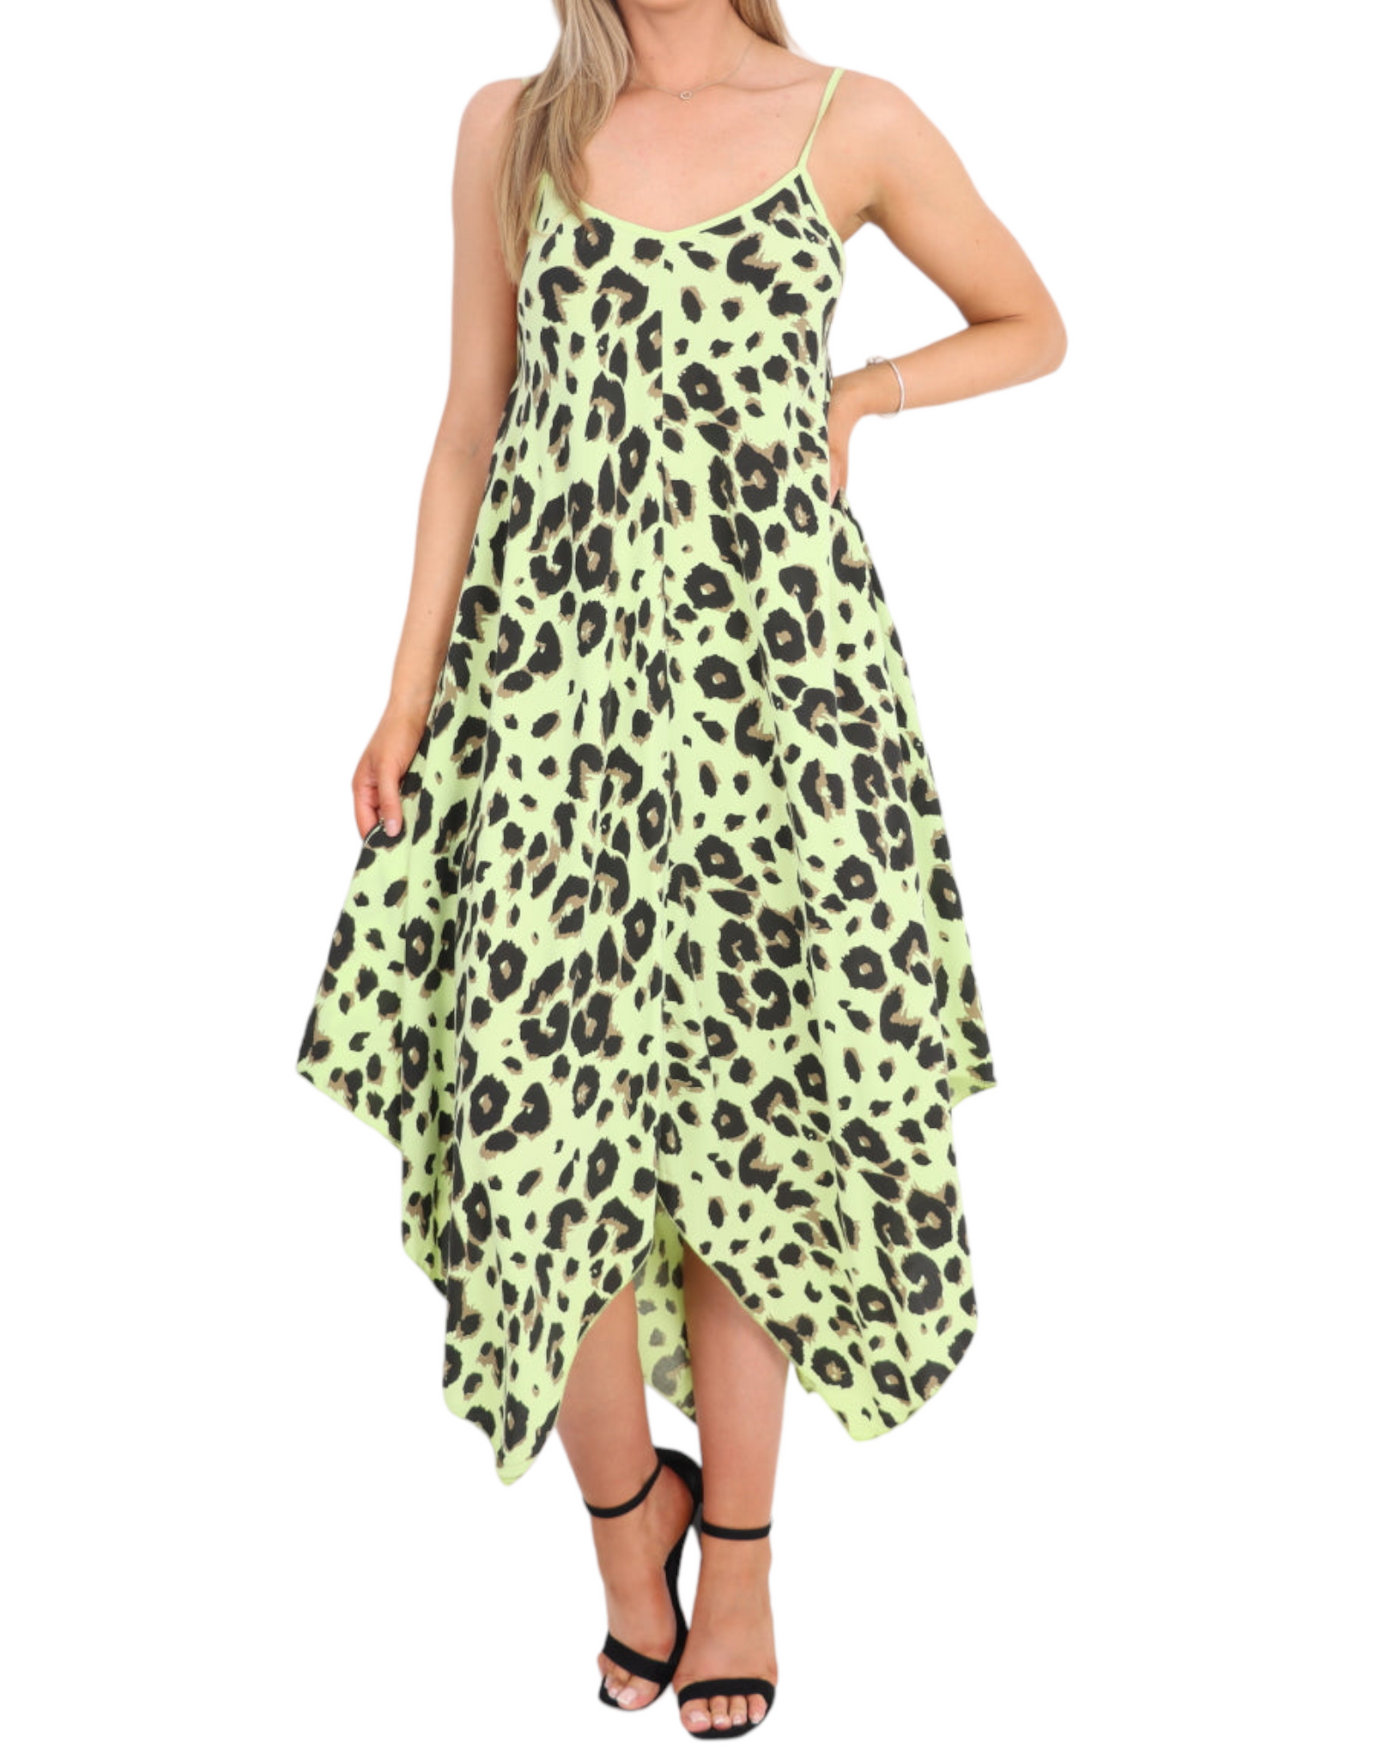 Leopard Print Handkerchief Dress